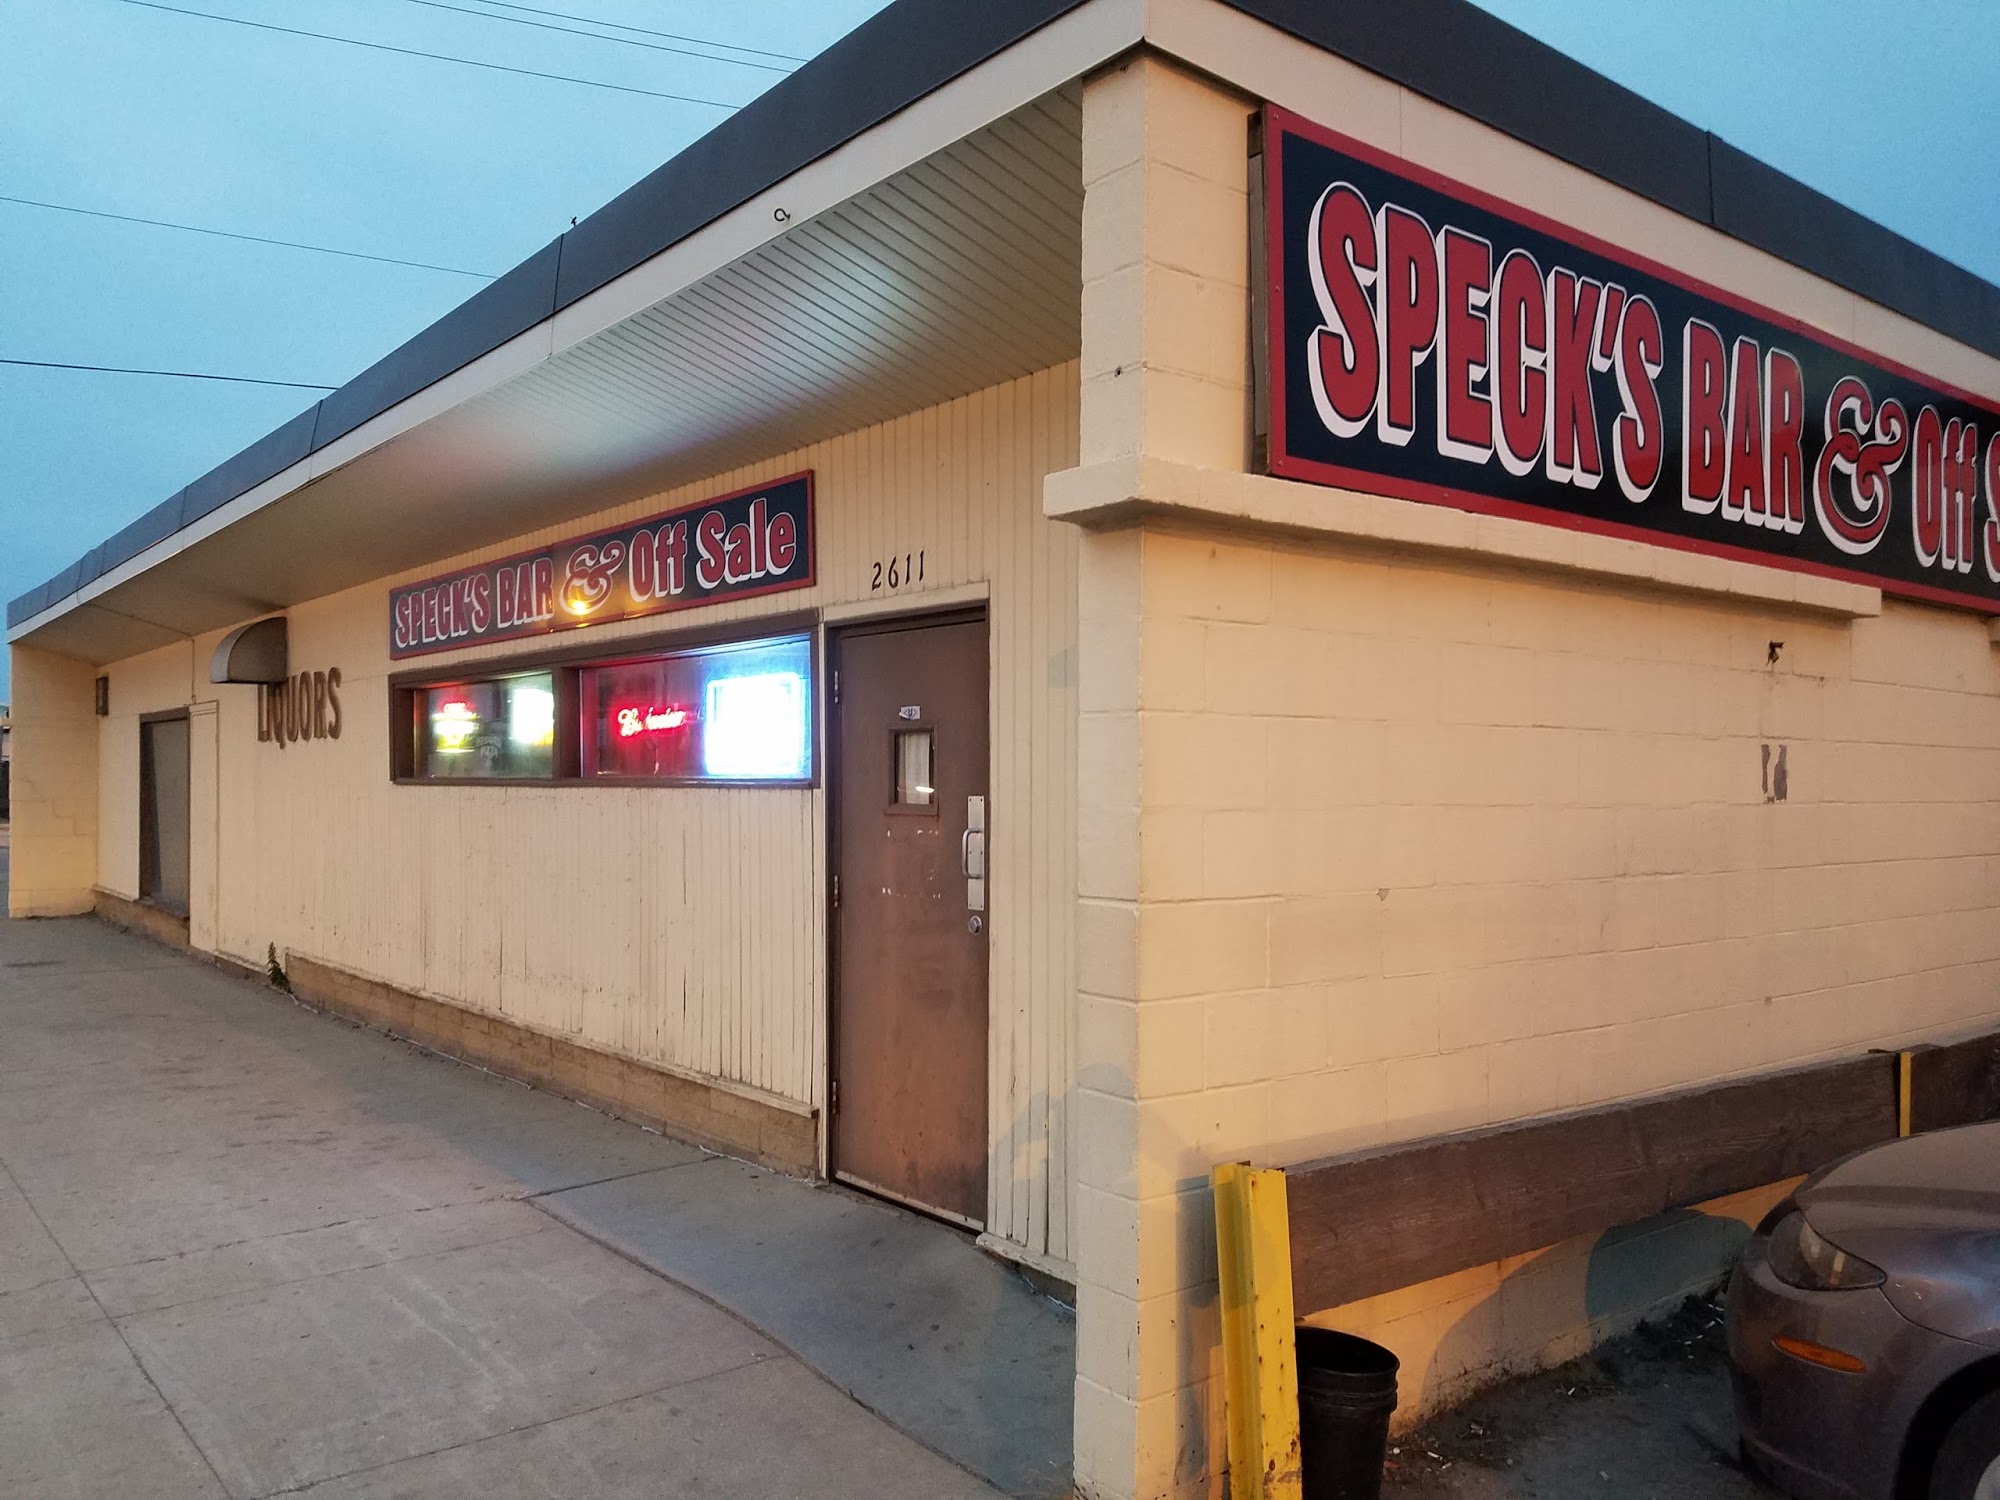 Speck's Bar